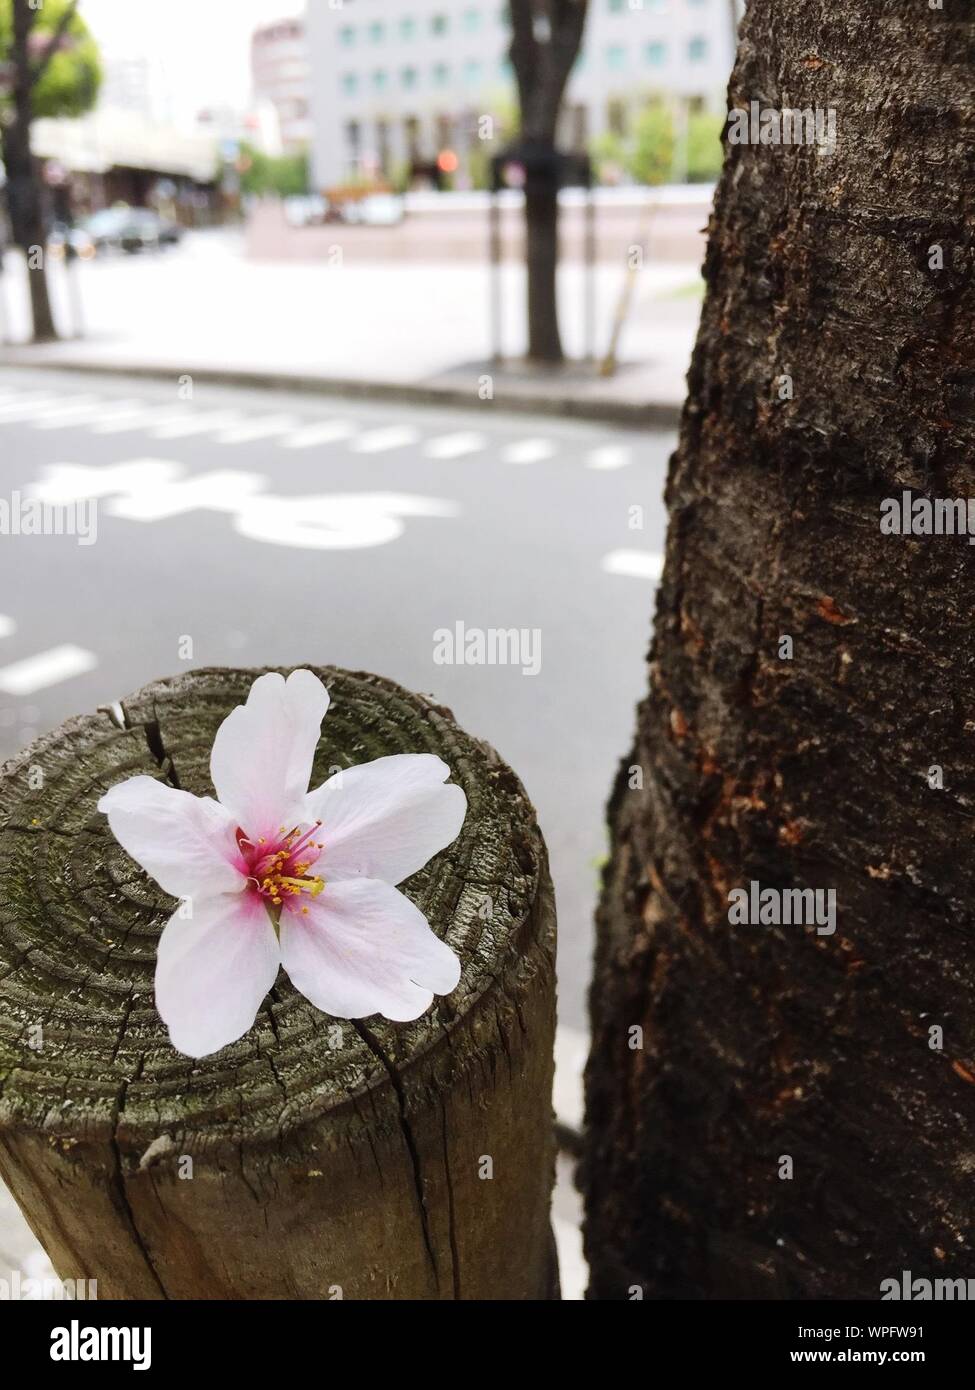 Flower On Top Of Tree Stump Stock Photo